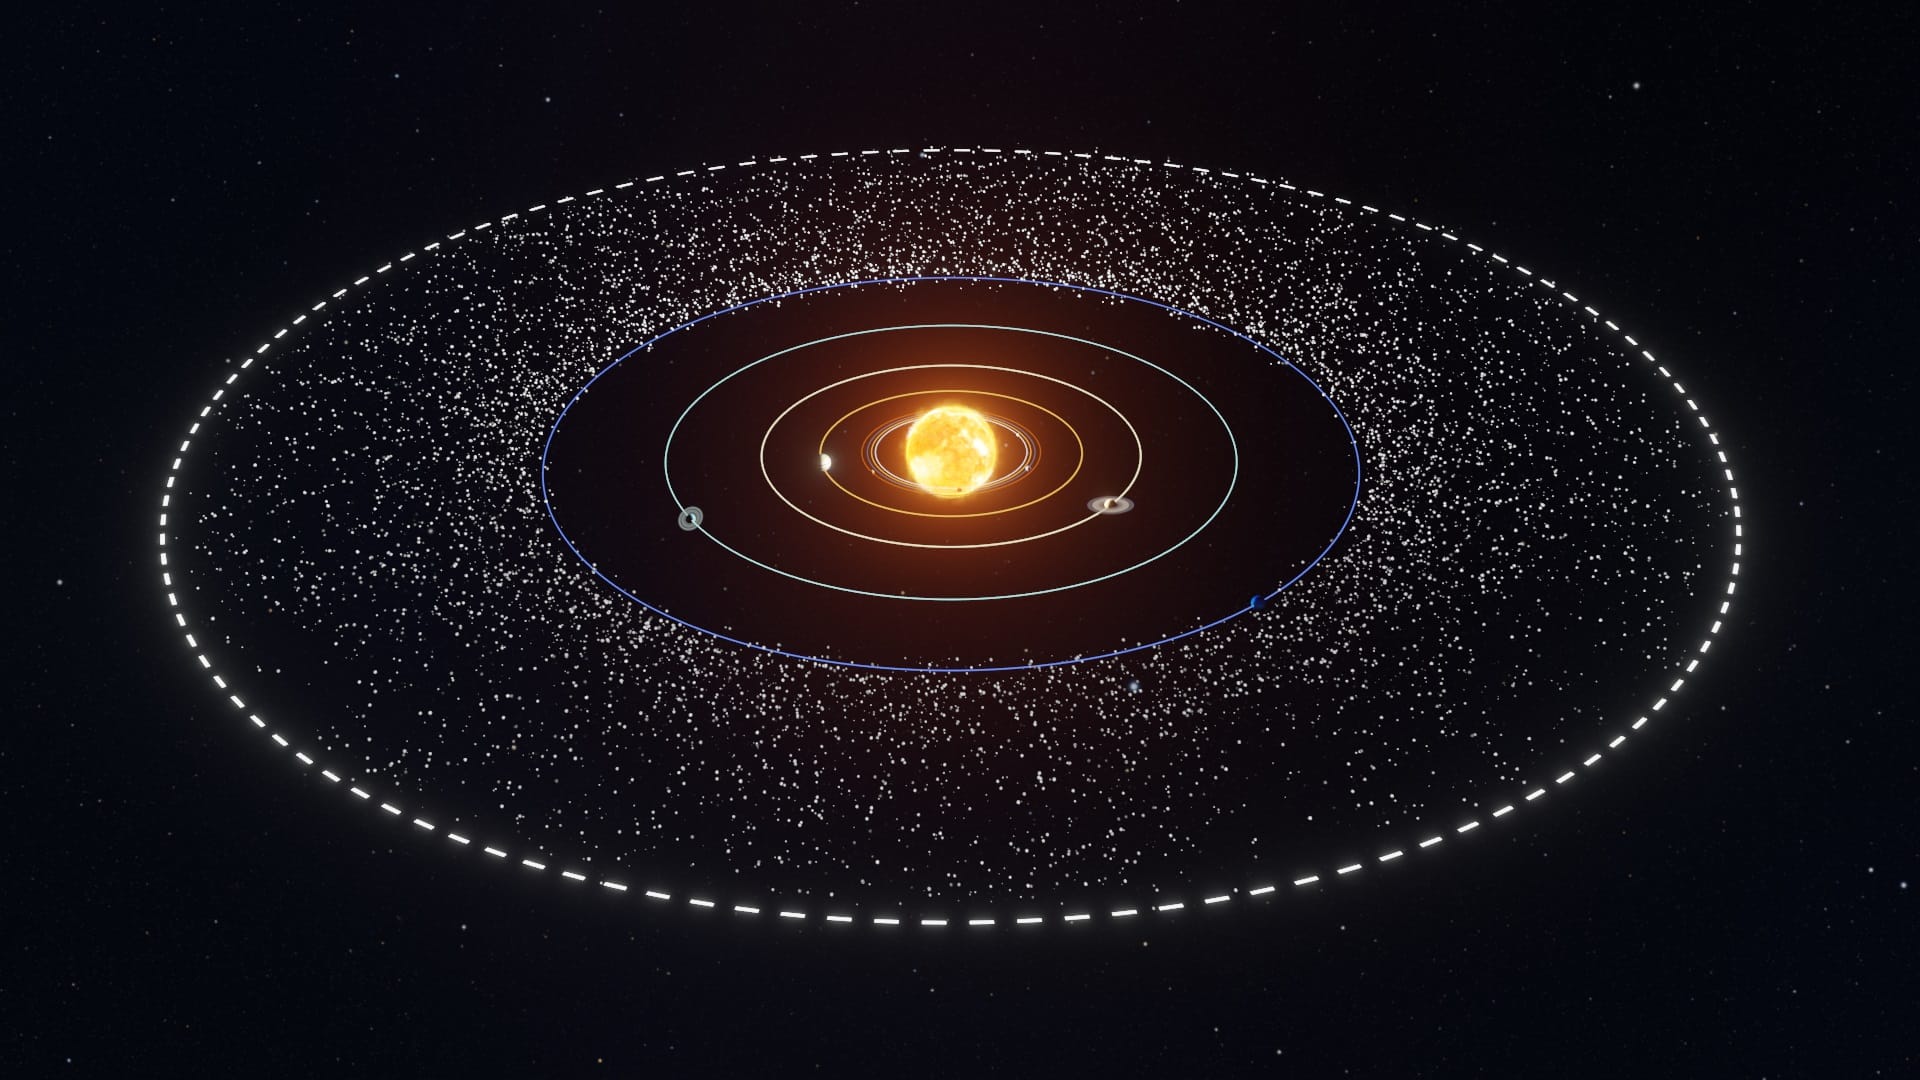 Kuiper Belt: The Solar System’s Frontier